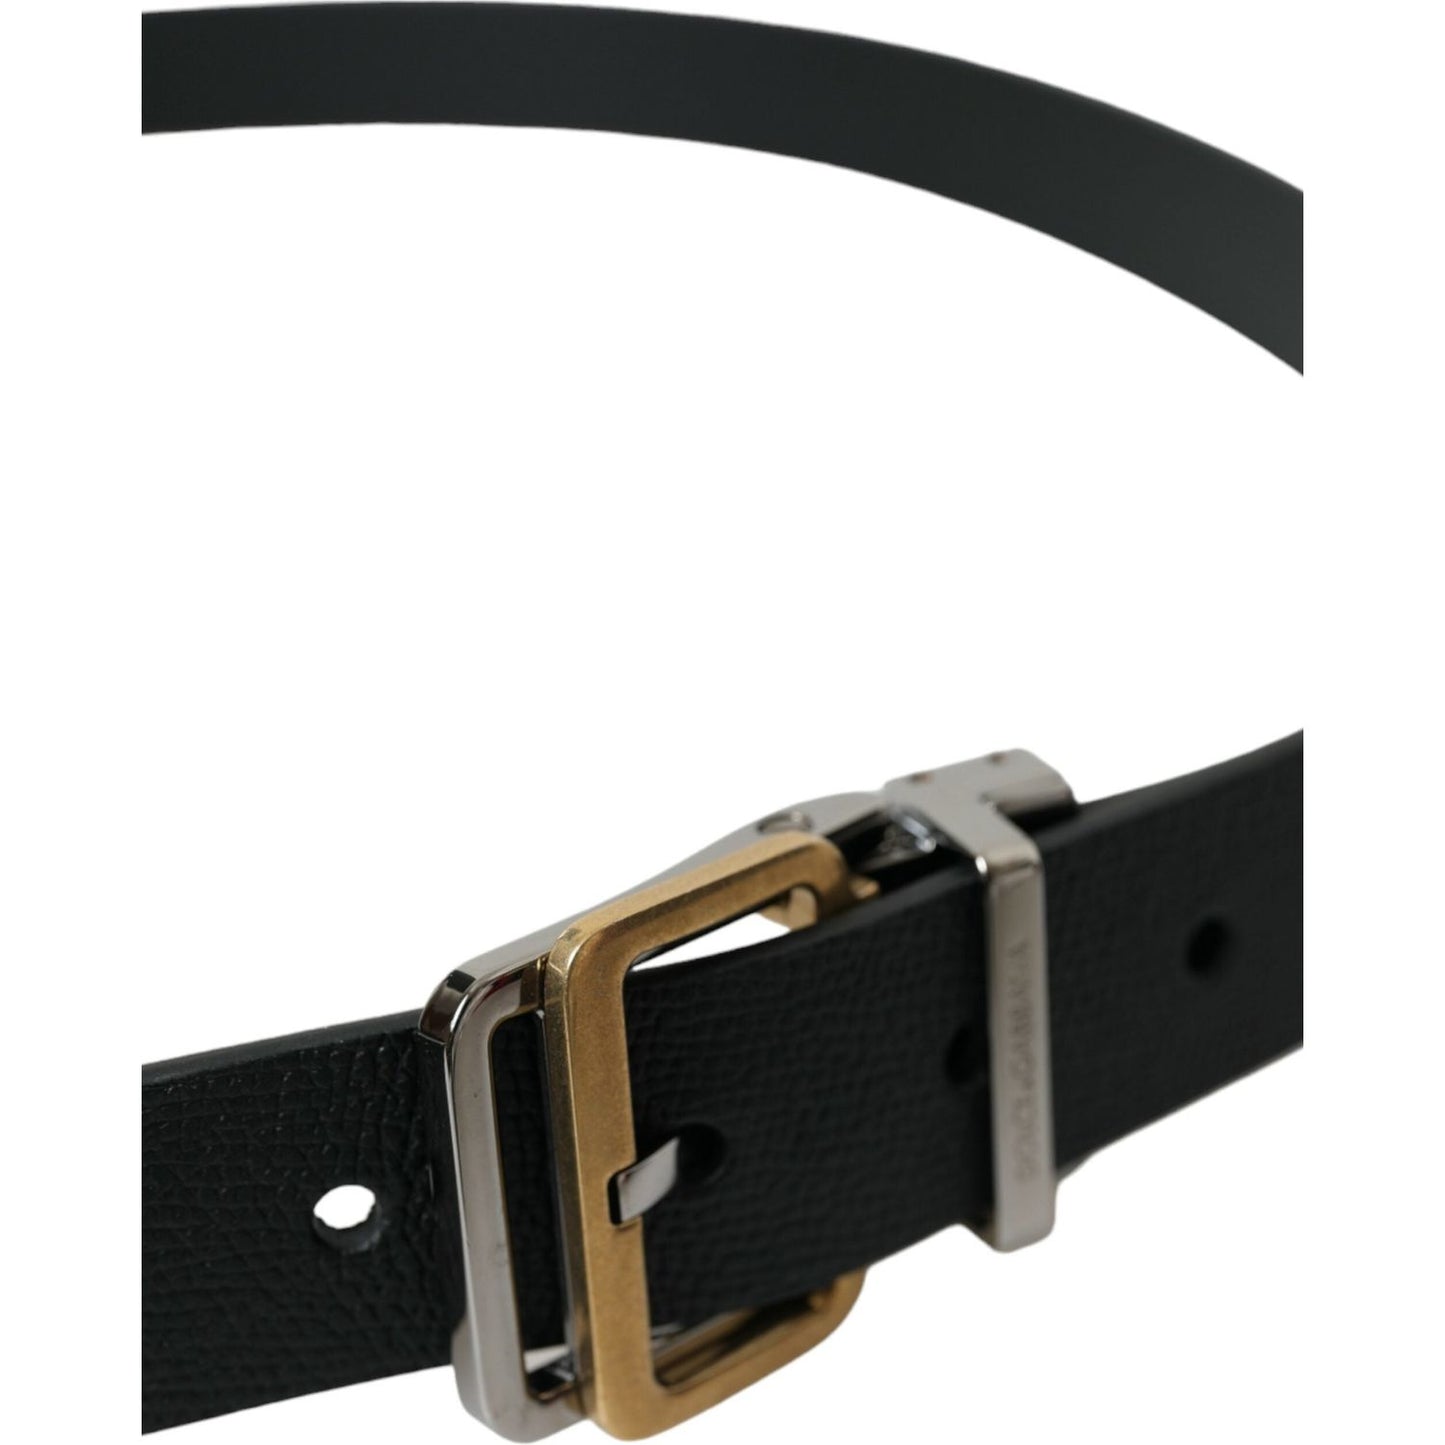 Dolce & Gabbana Elegant Black Leather Belt with Metal Buckle elegant-black-leather-belt-with-metal-buckle-12